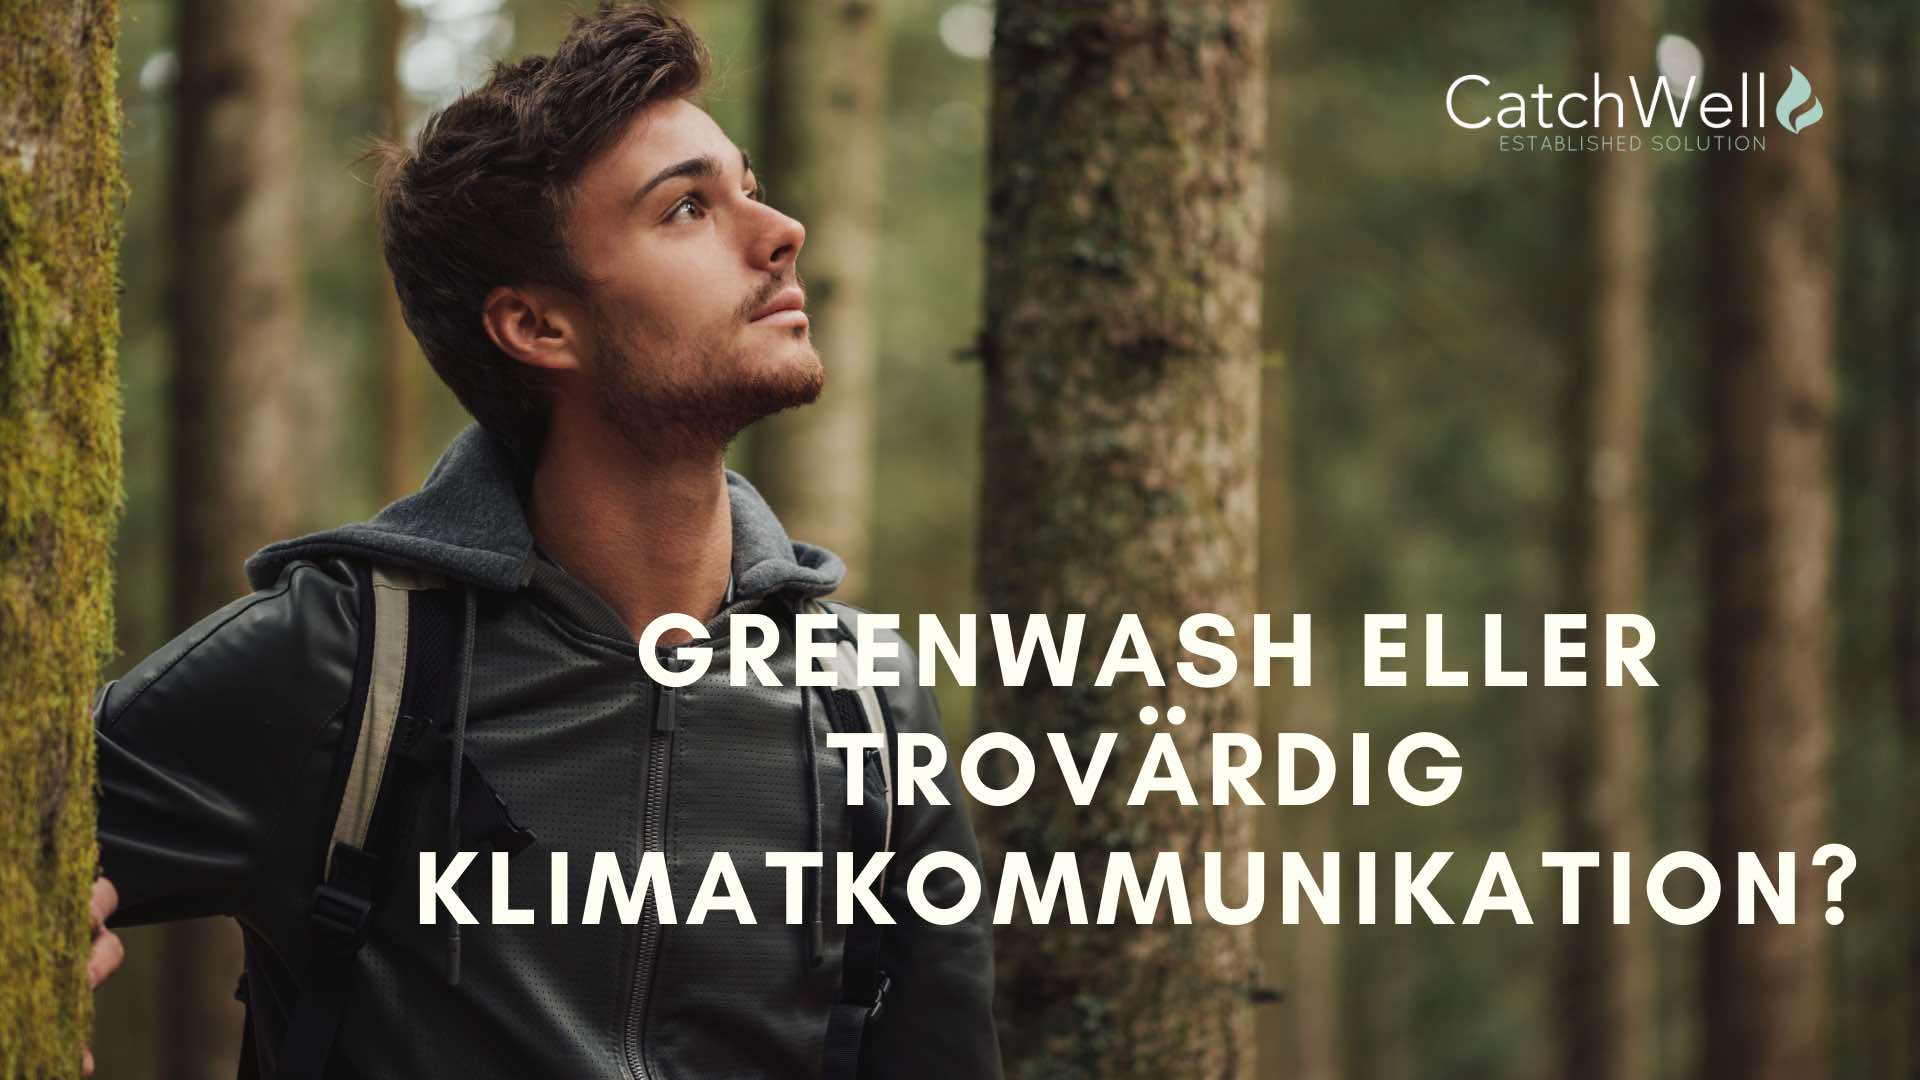 Greenwash eller trovärdig klimatkommunikation